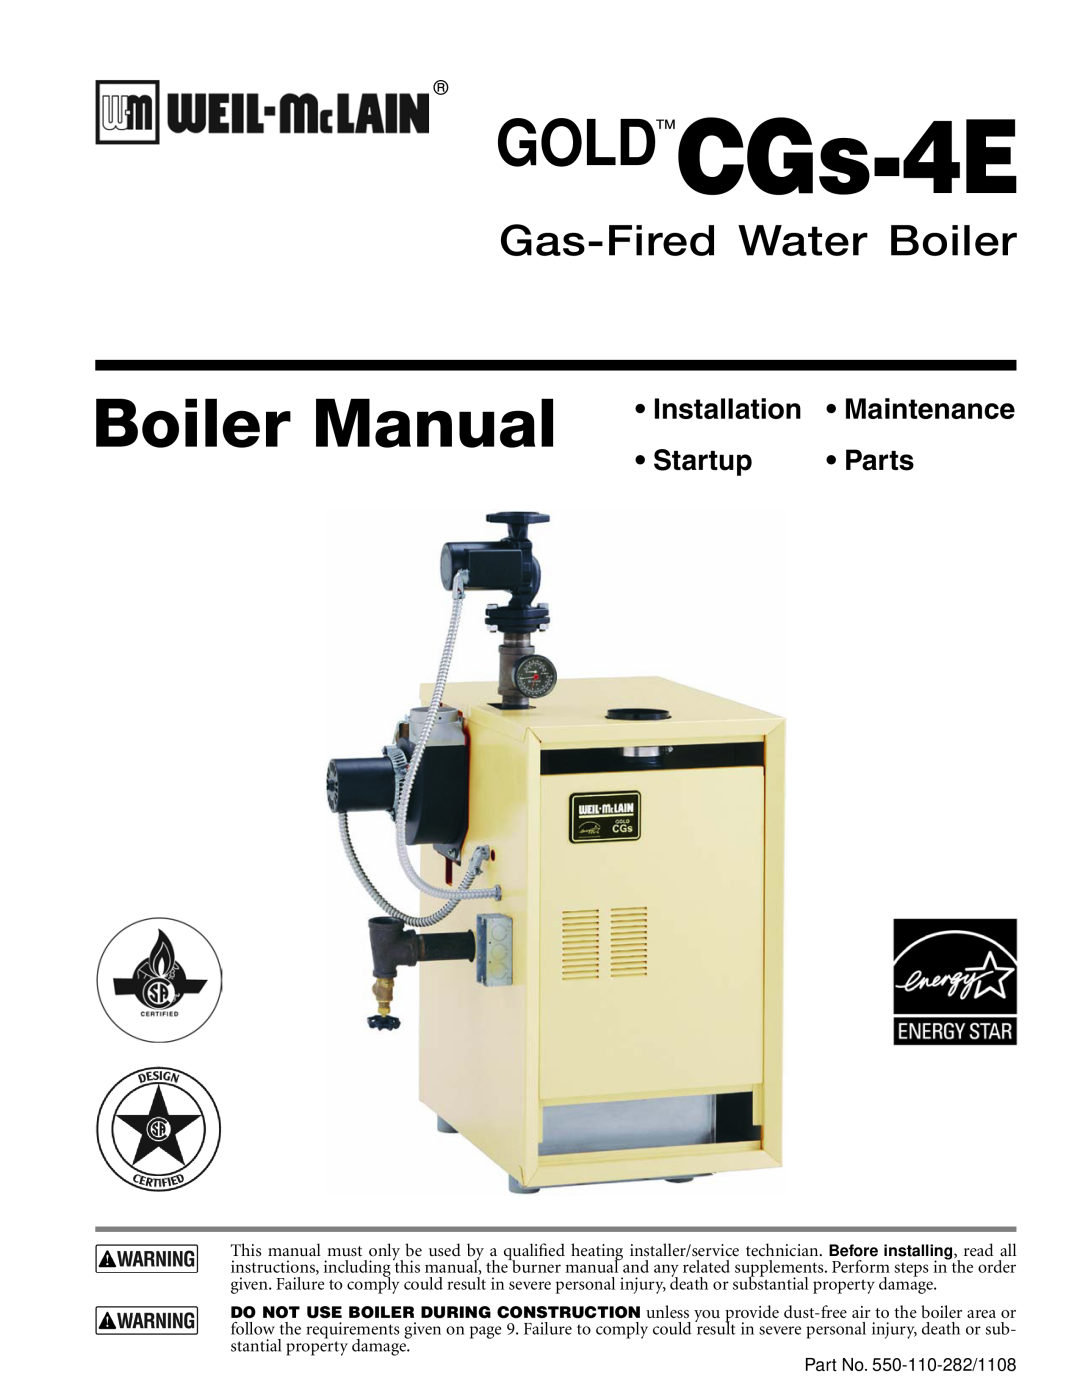 Weil-McLain CGS-4E manual Installation Maintenance, Startup Parts, GOLDCGs-4E, Boiler Manual, Gas-FiredWater Boiler 